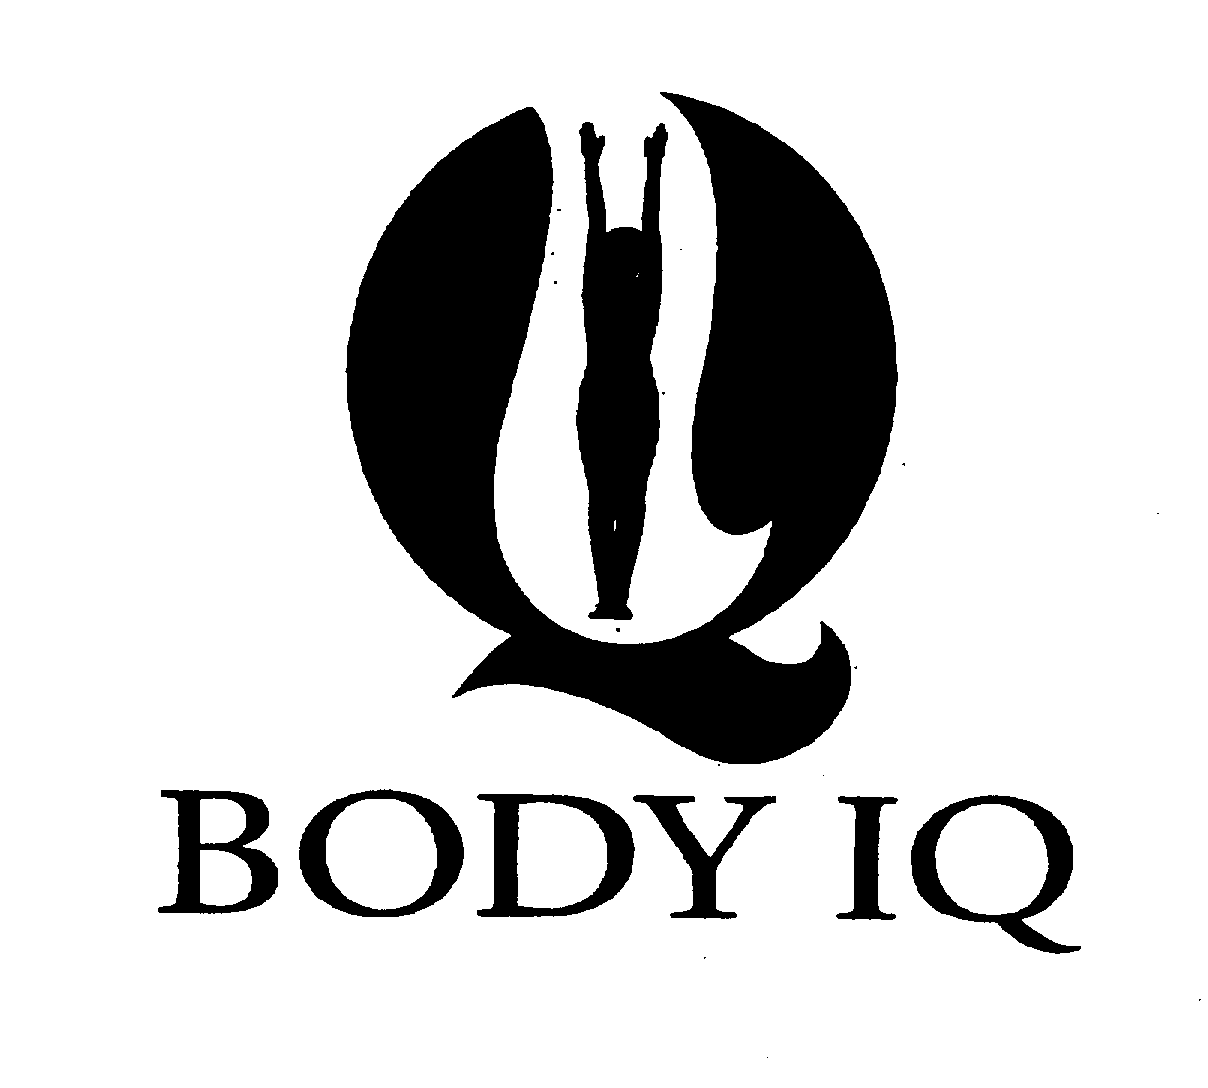 BODY IQ